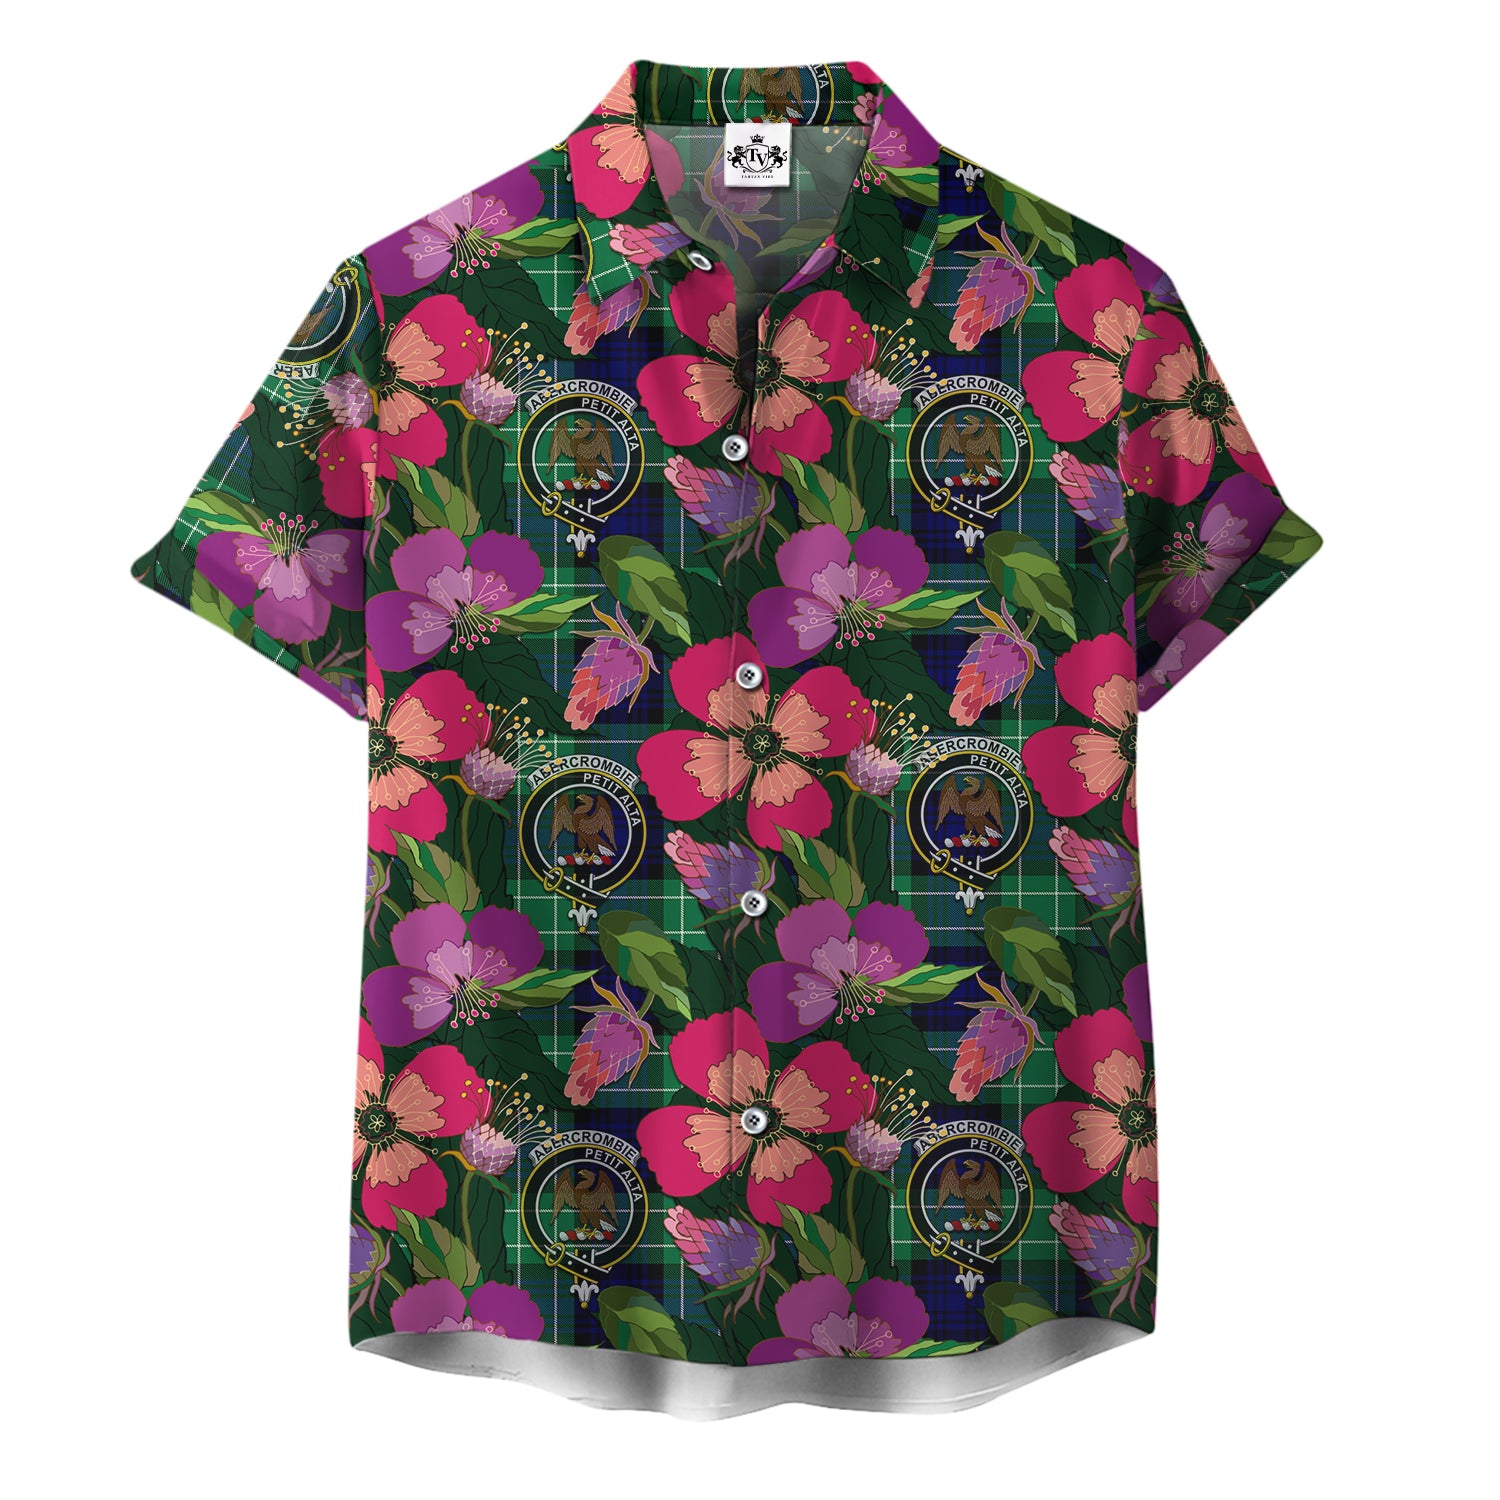 Abercrombie Crest Tartan Seamless Pattern of Thistle and Poppy Flowers Hawaiian Shirt K23